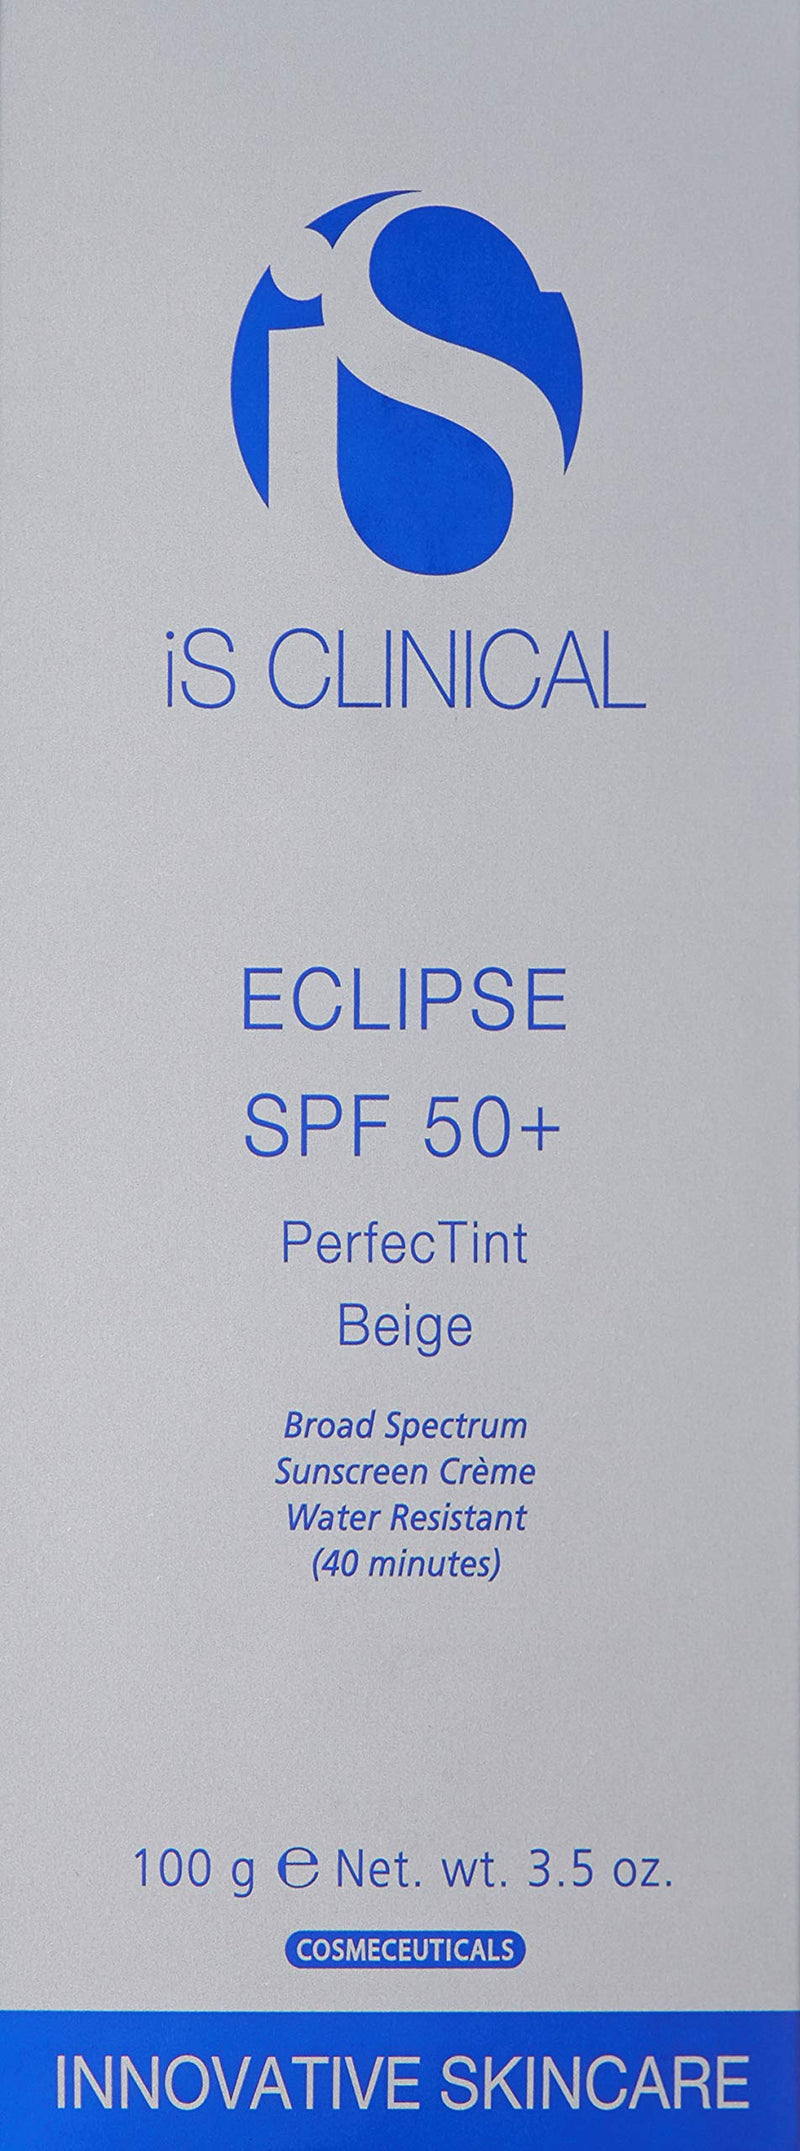 iS CLINICAL Eclipse SPF 50+ PerfecTint Beige - NewNest Australia